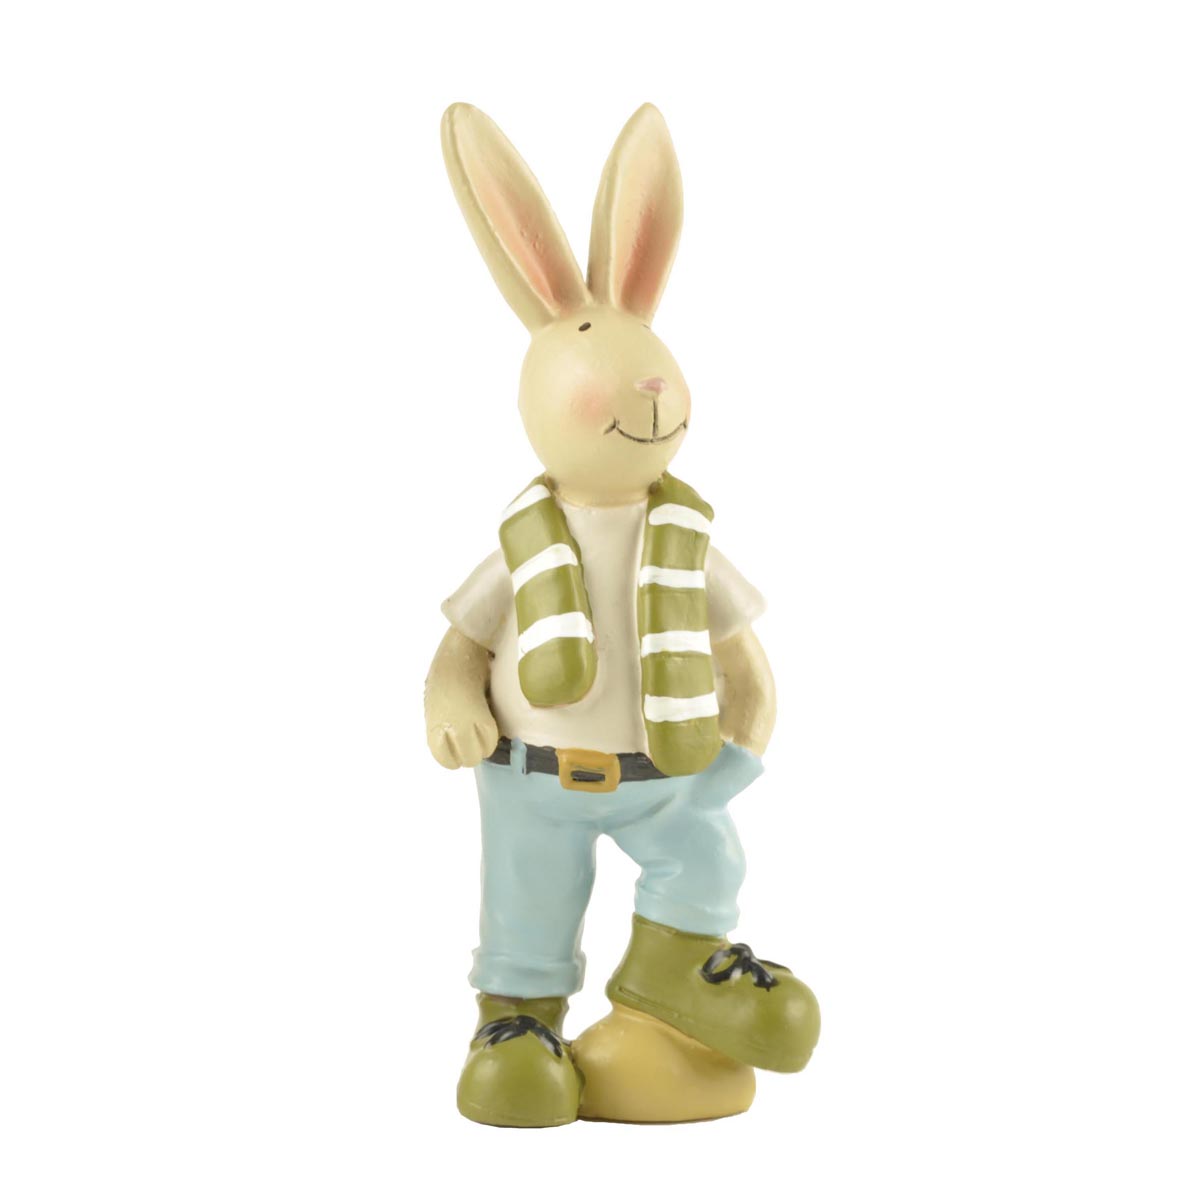 free sample vintage easter bunny figurines handmade crafts micro landscape